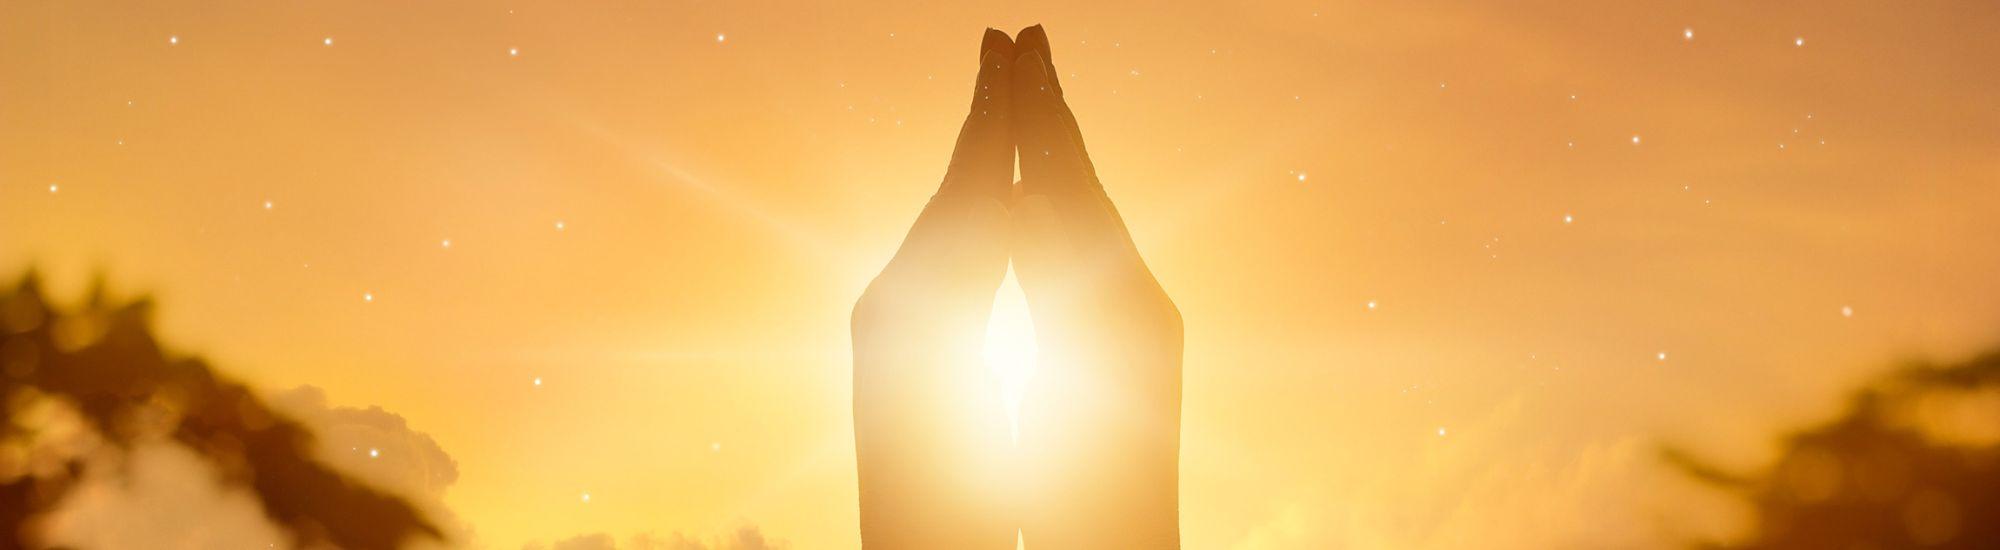 hands in prayer with sun shining through